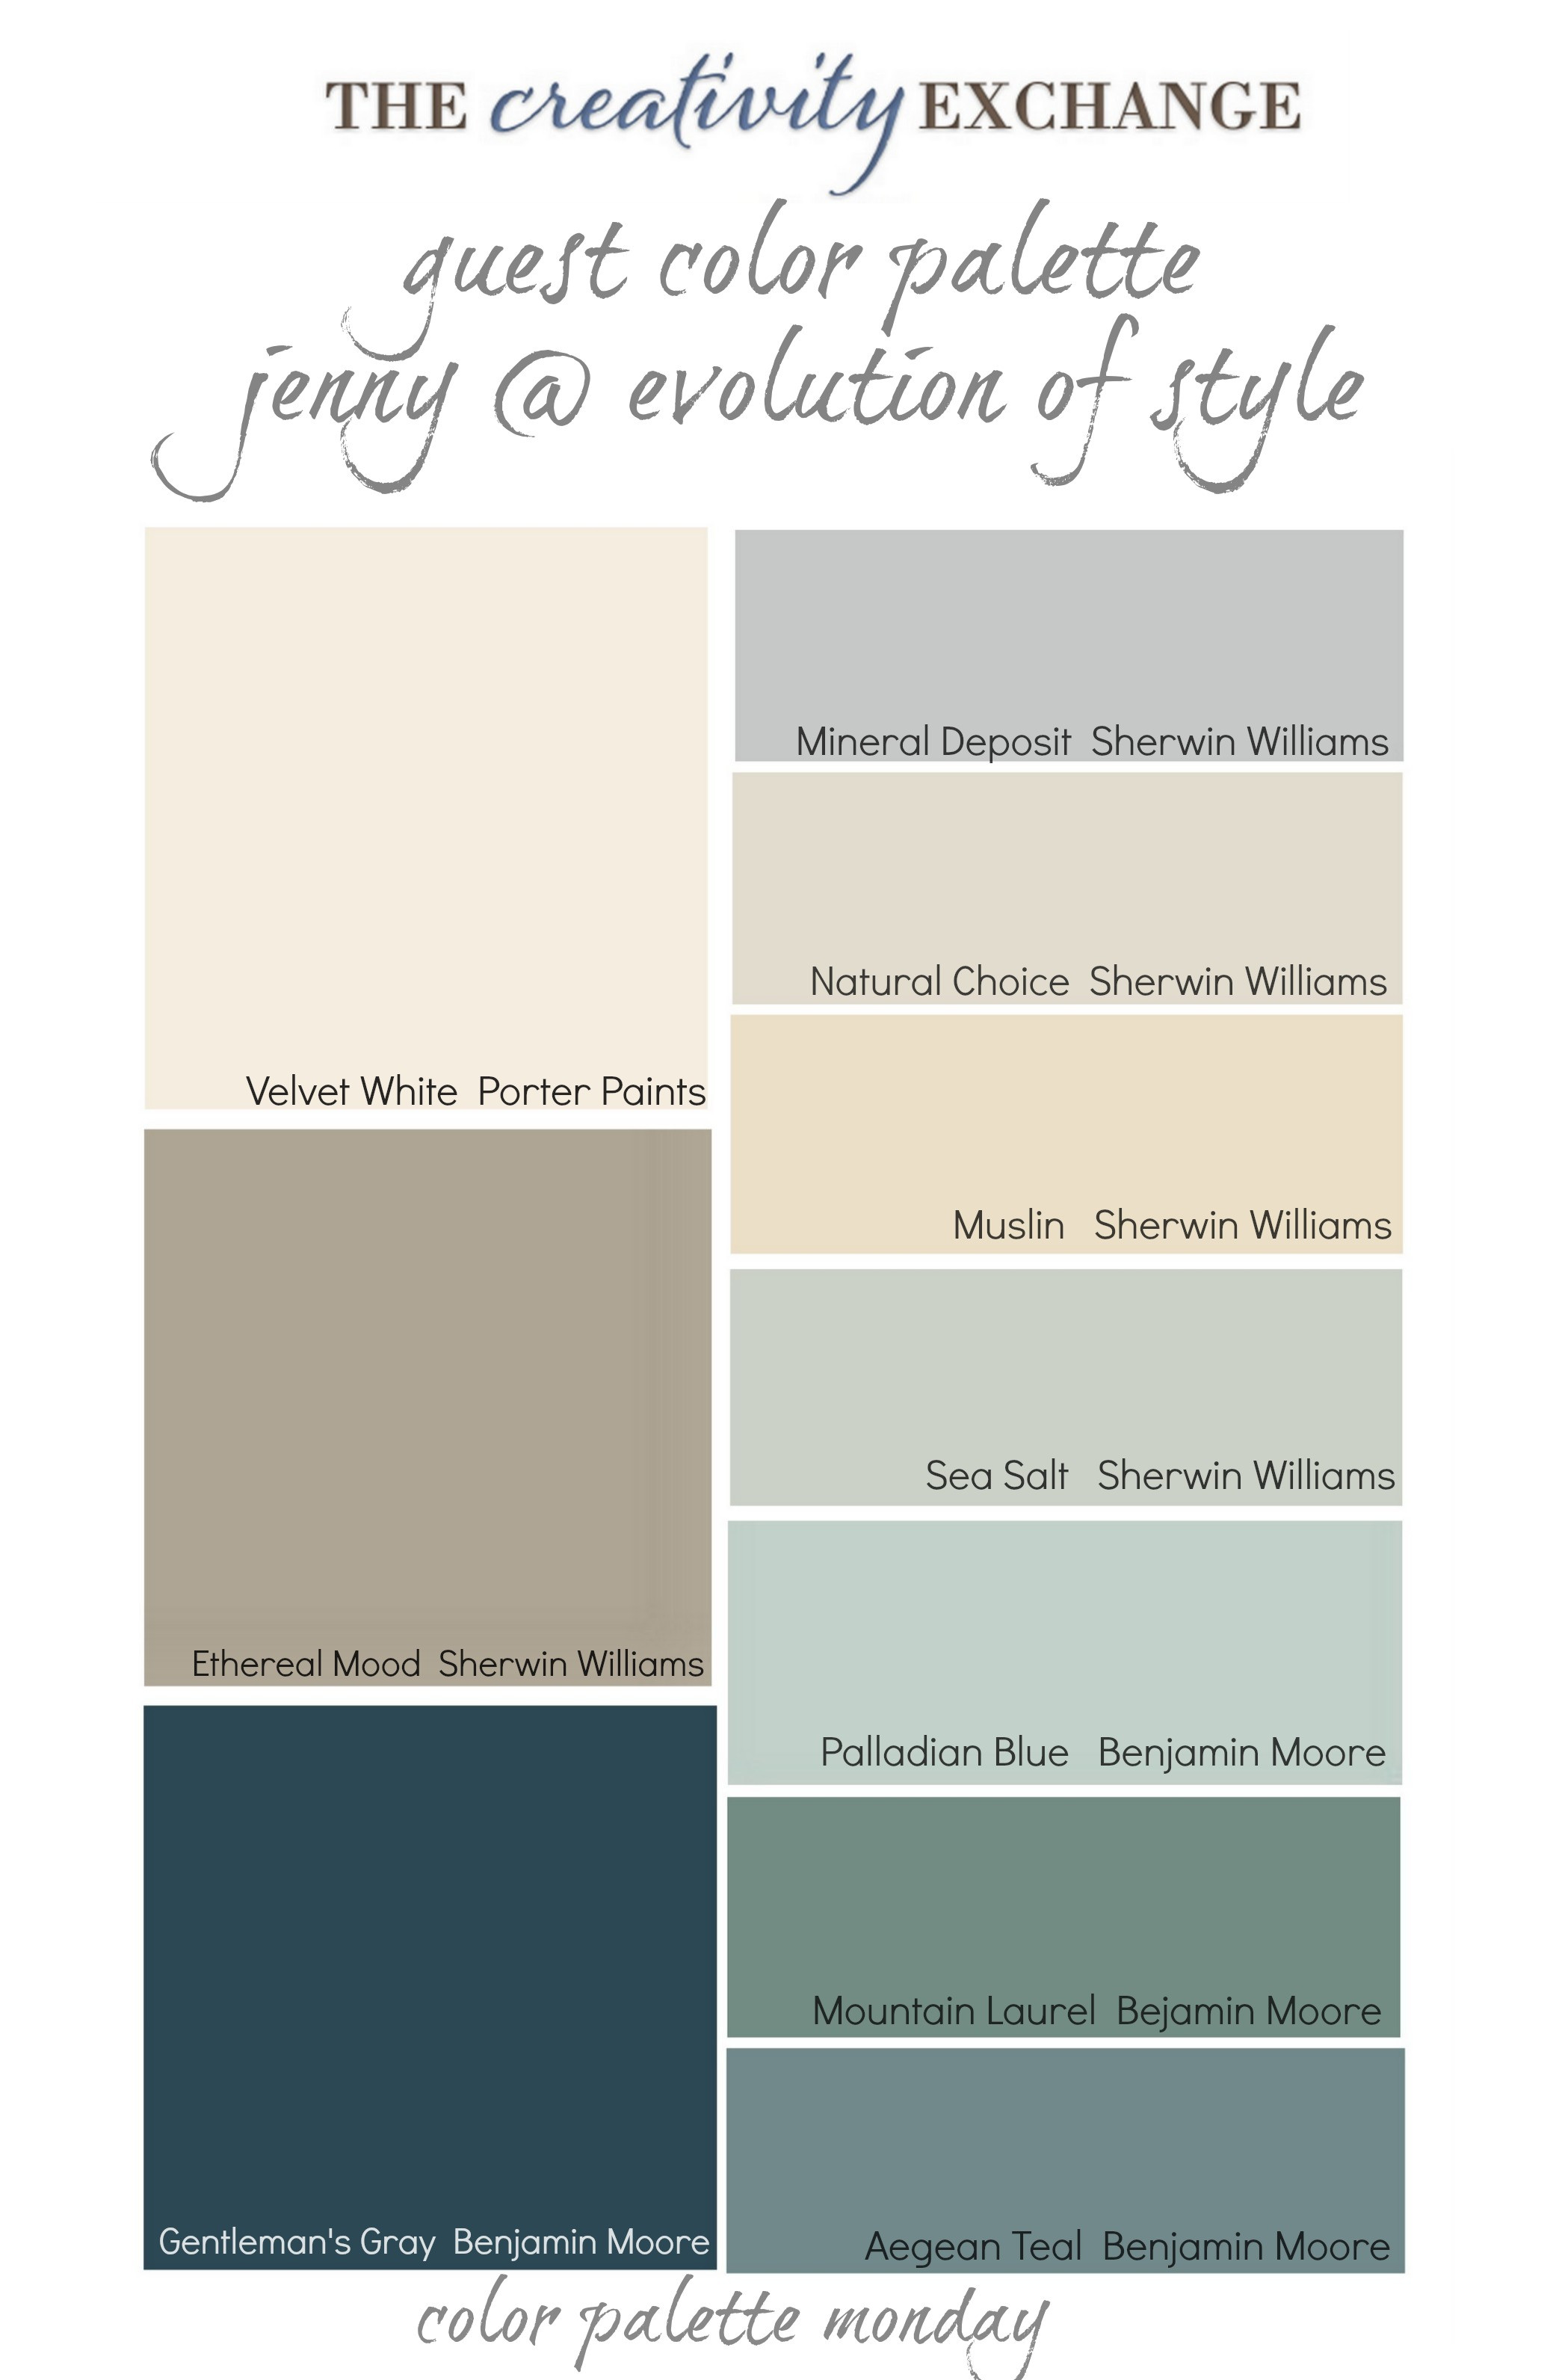 Best ideas about Sherman Williams Paint Colors
. Save or Pin Readers Favorite Paint Colors Color Palette Monday Now.